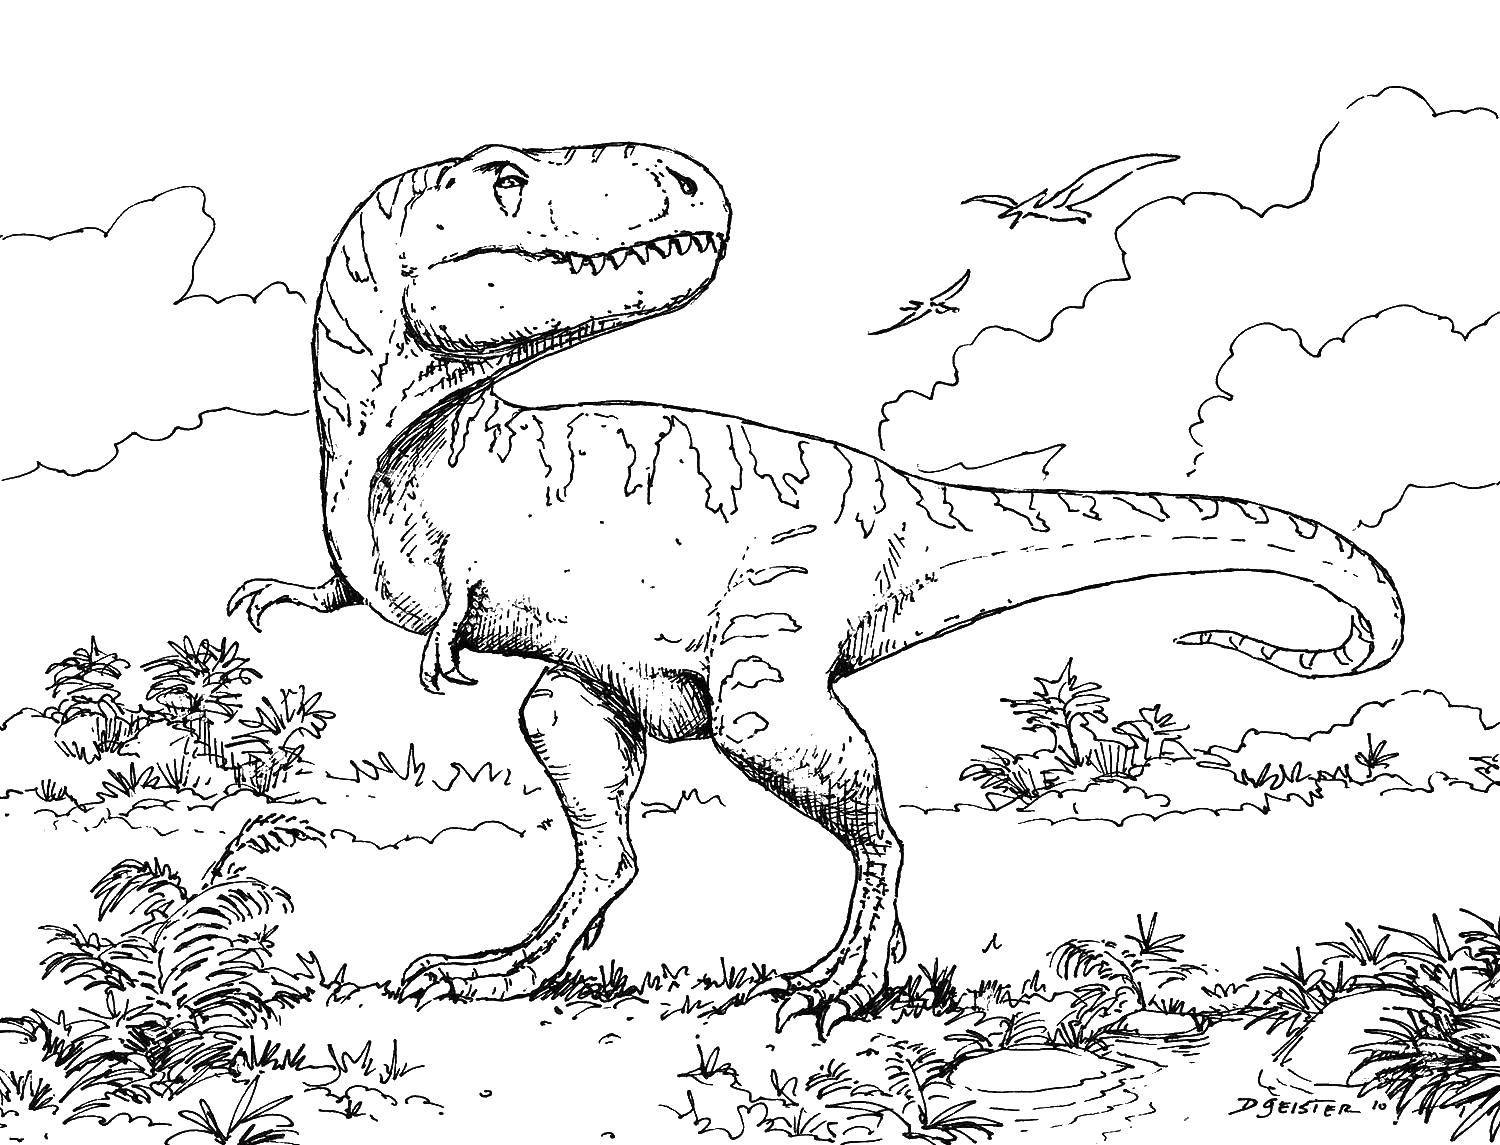 Coloring Large dinosaur. Category Jurassic Park. Tags:  Jurassic Park, dinosaurs.